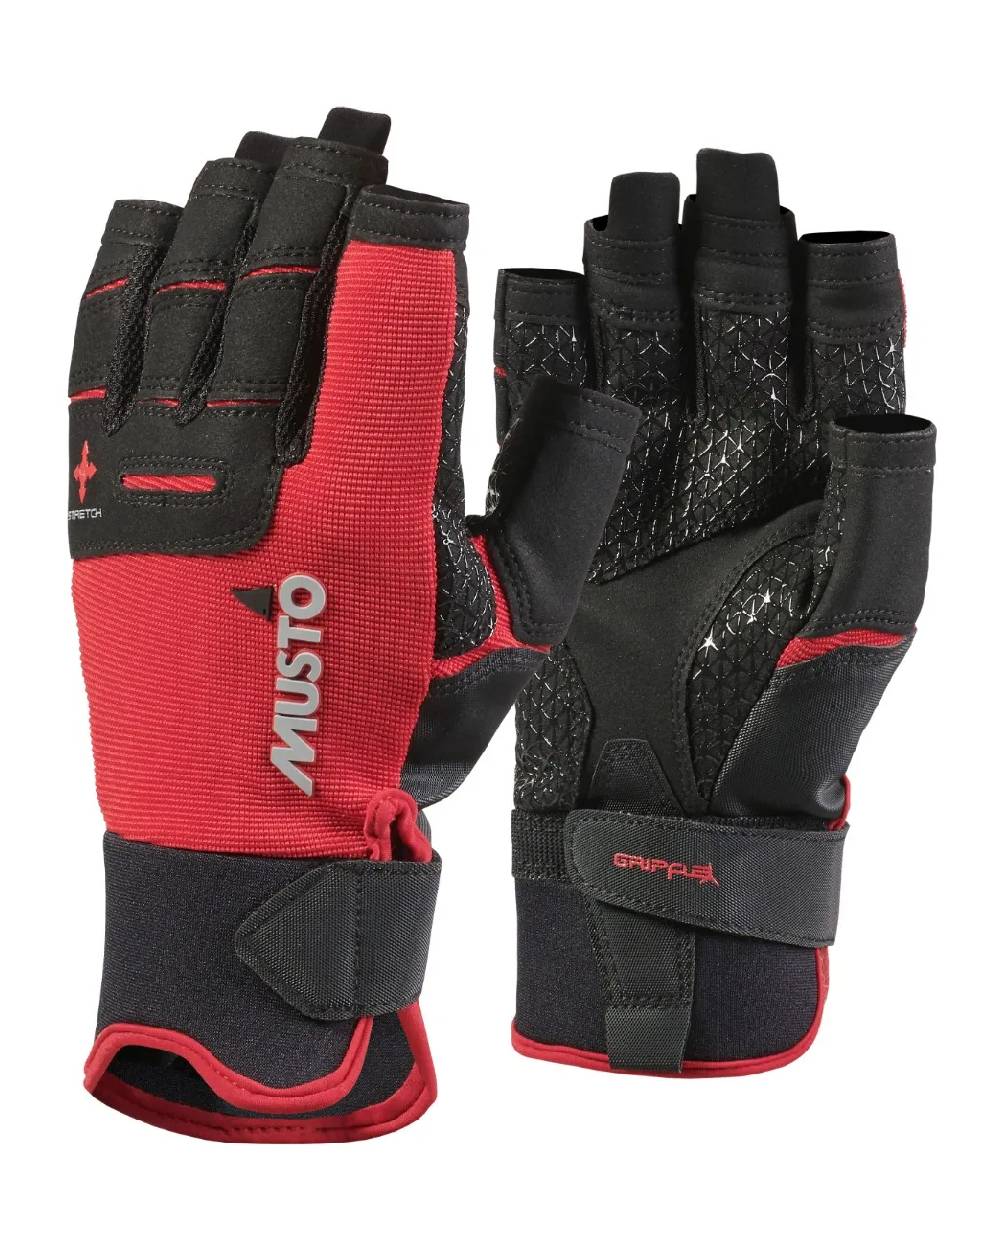 Musto Performance Short Finger Gloves in True Red 